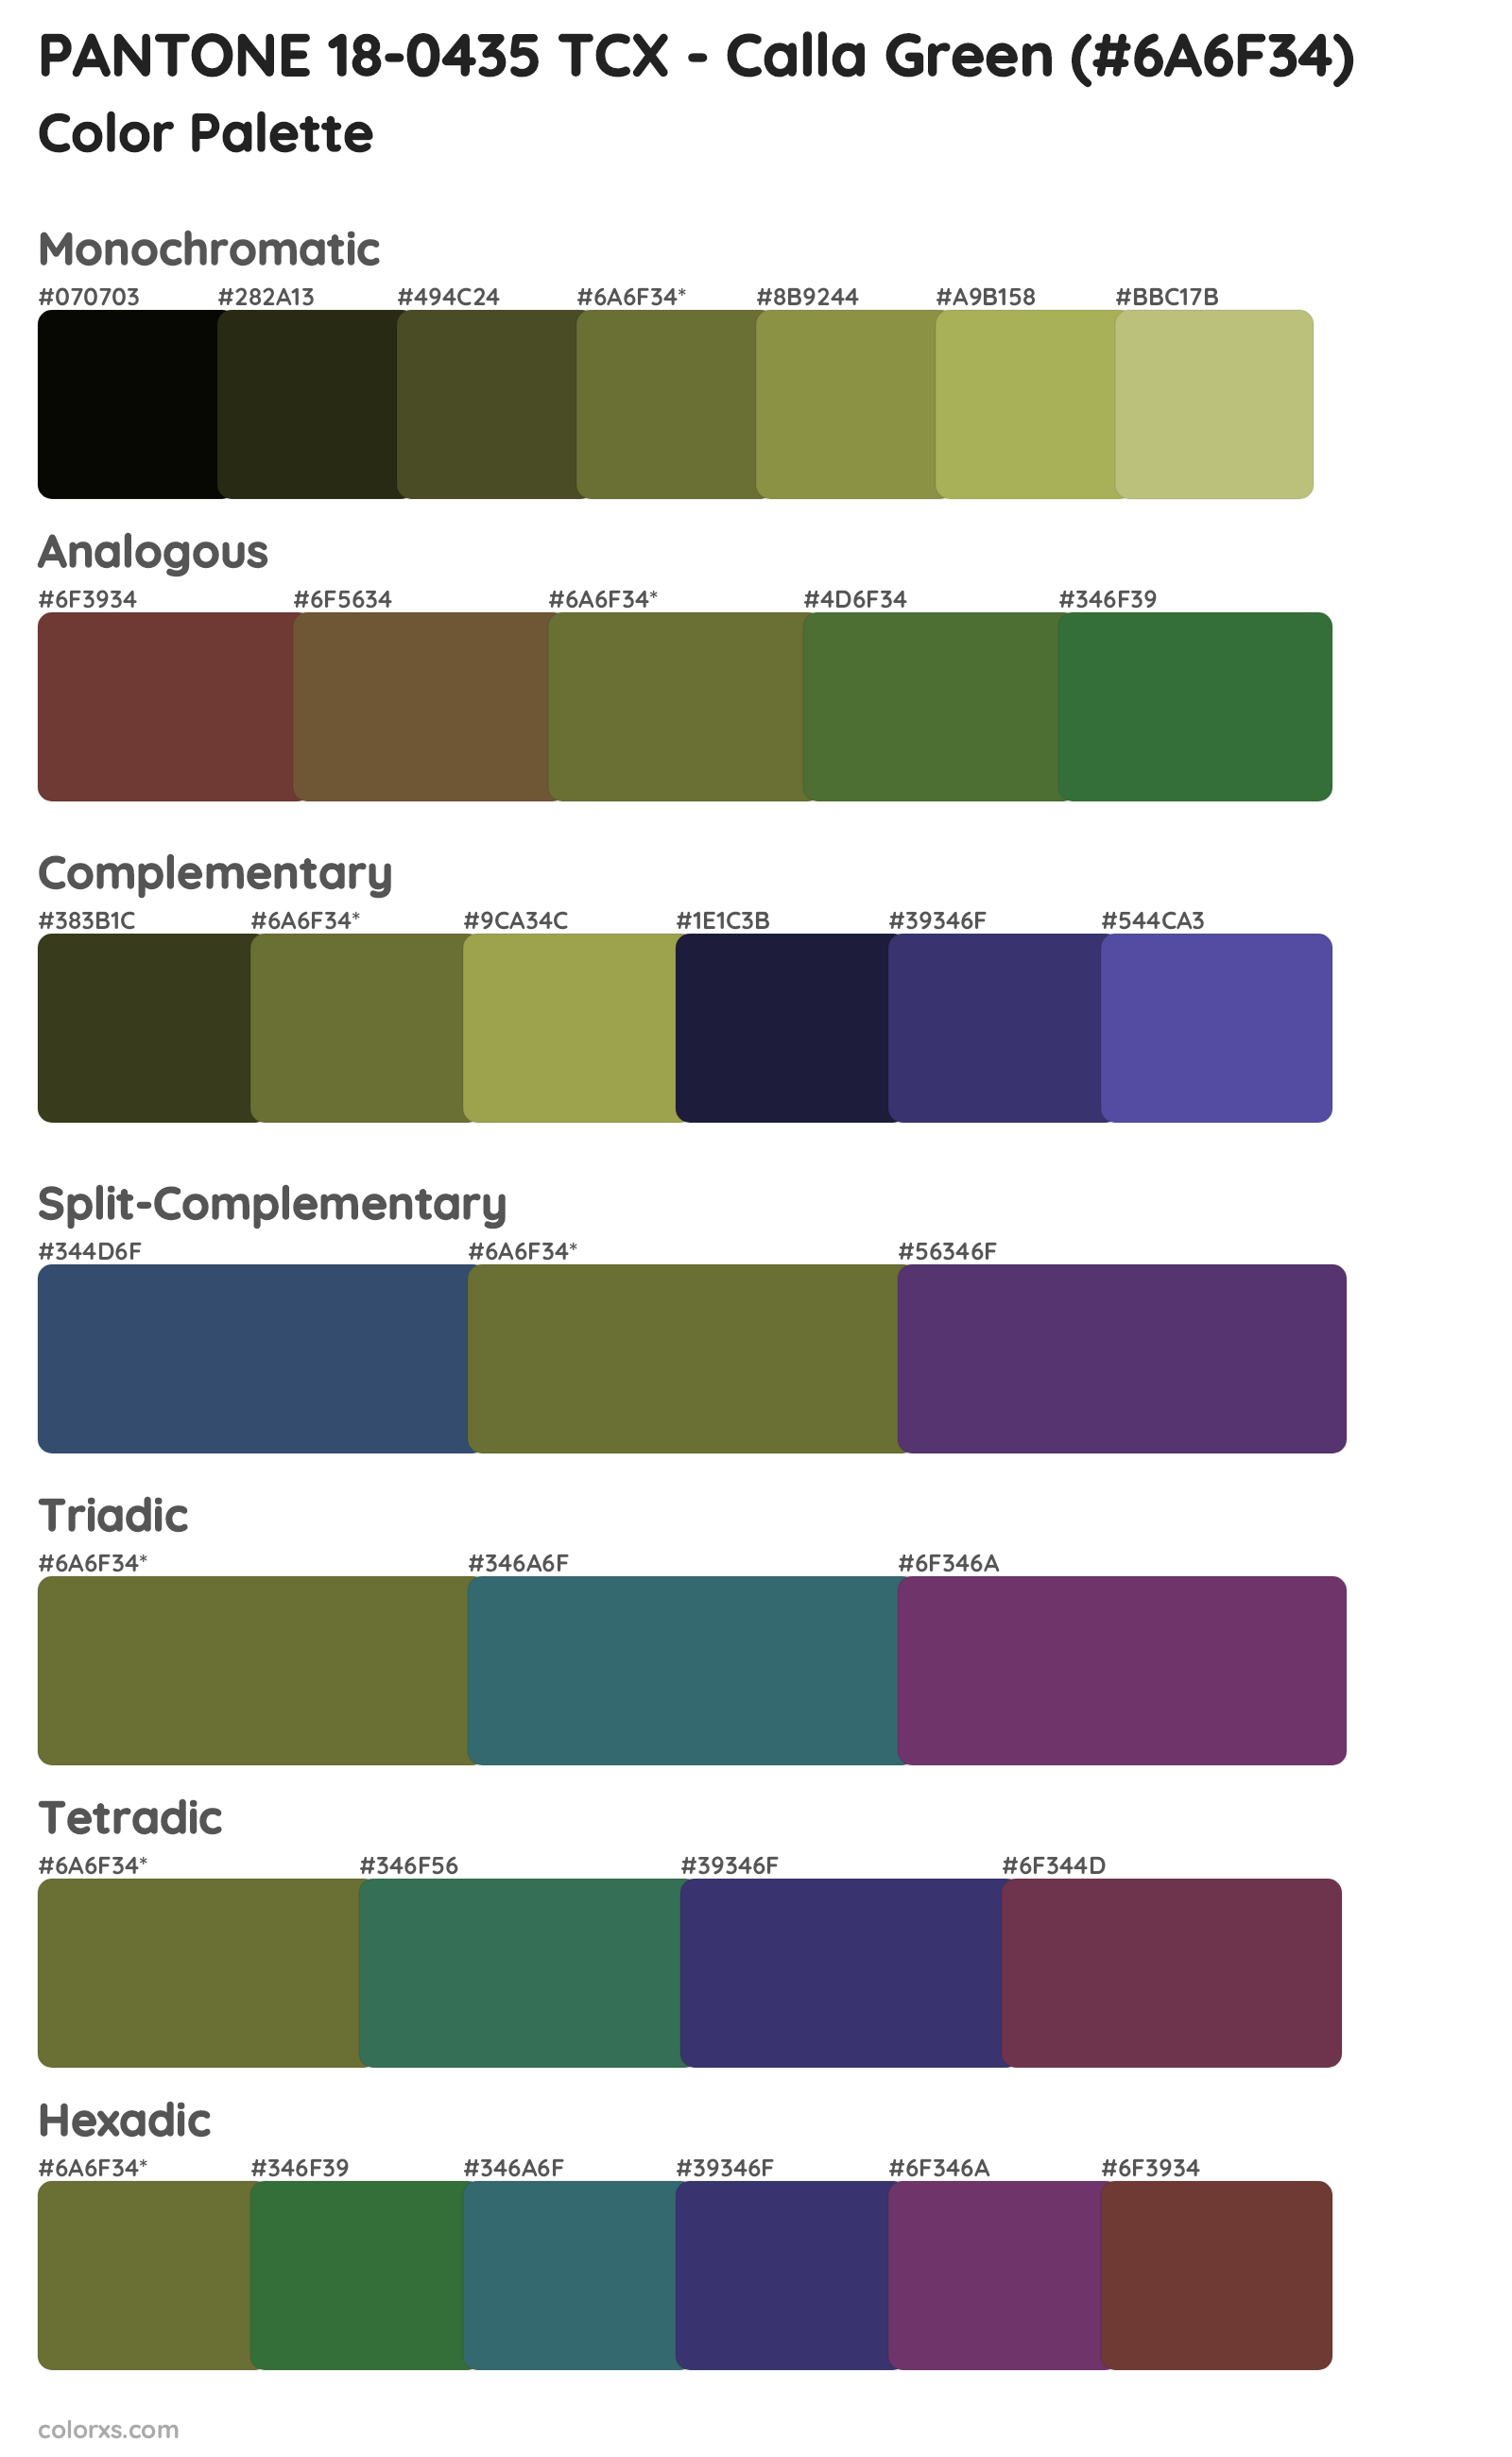 PANTONE 18-0435 TCX - Calla Green Color Scheme Palettes